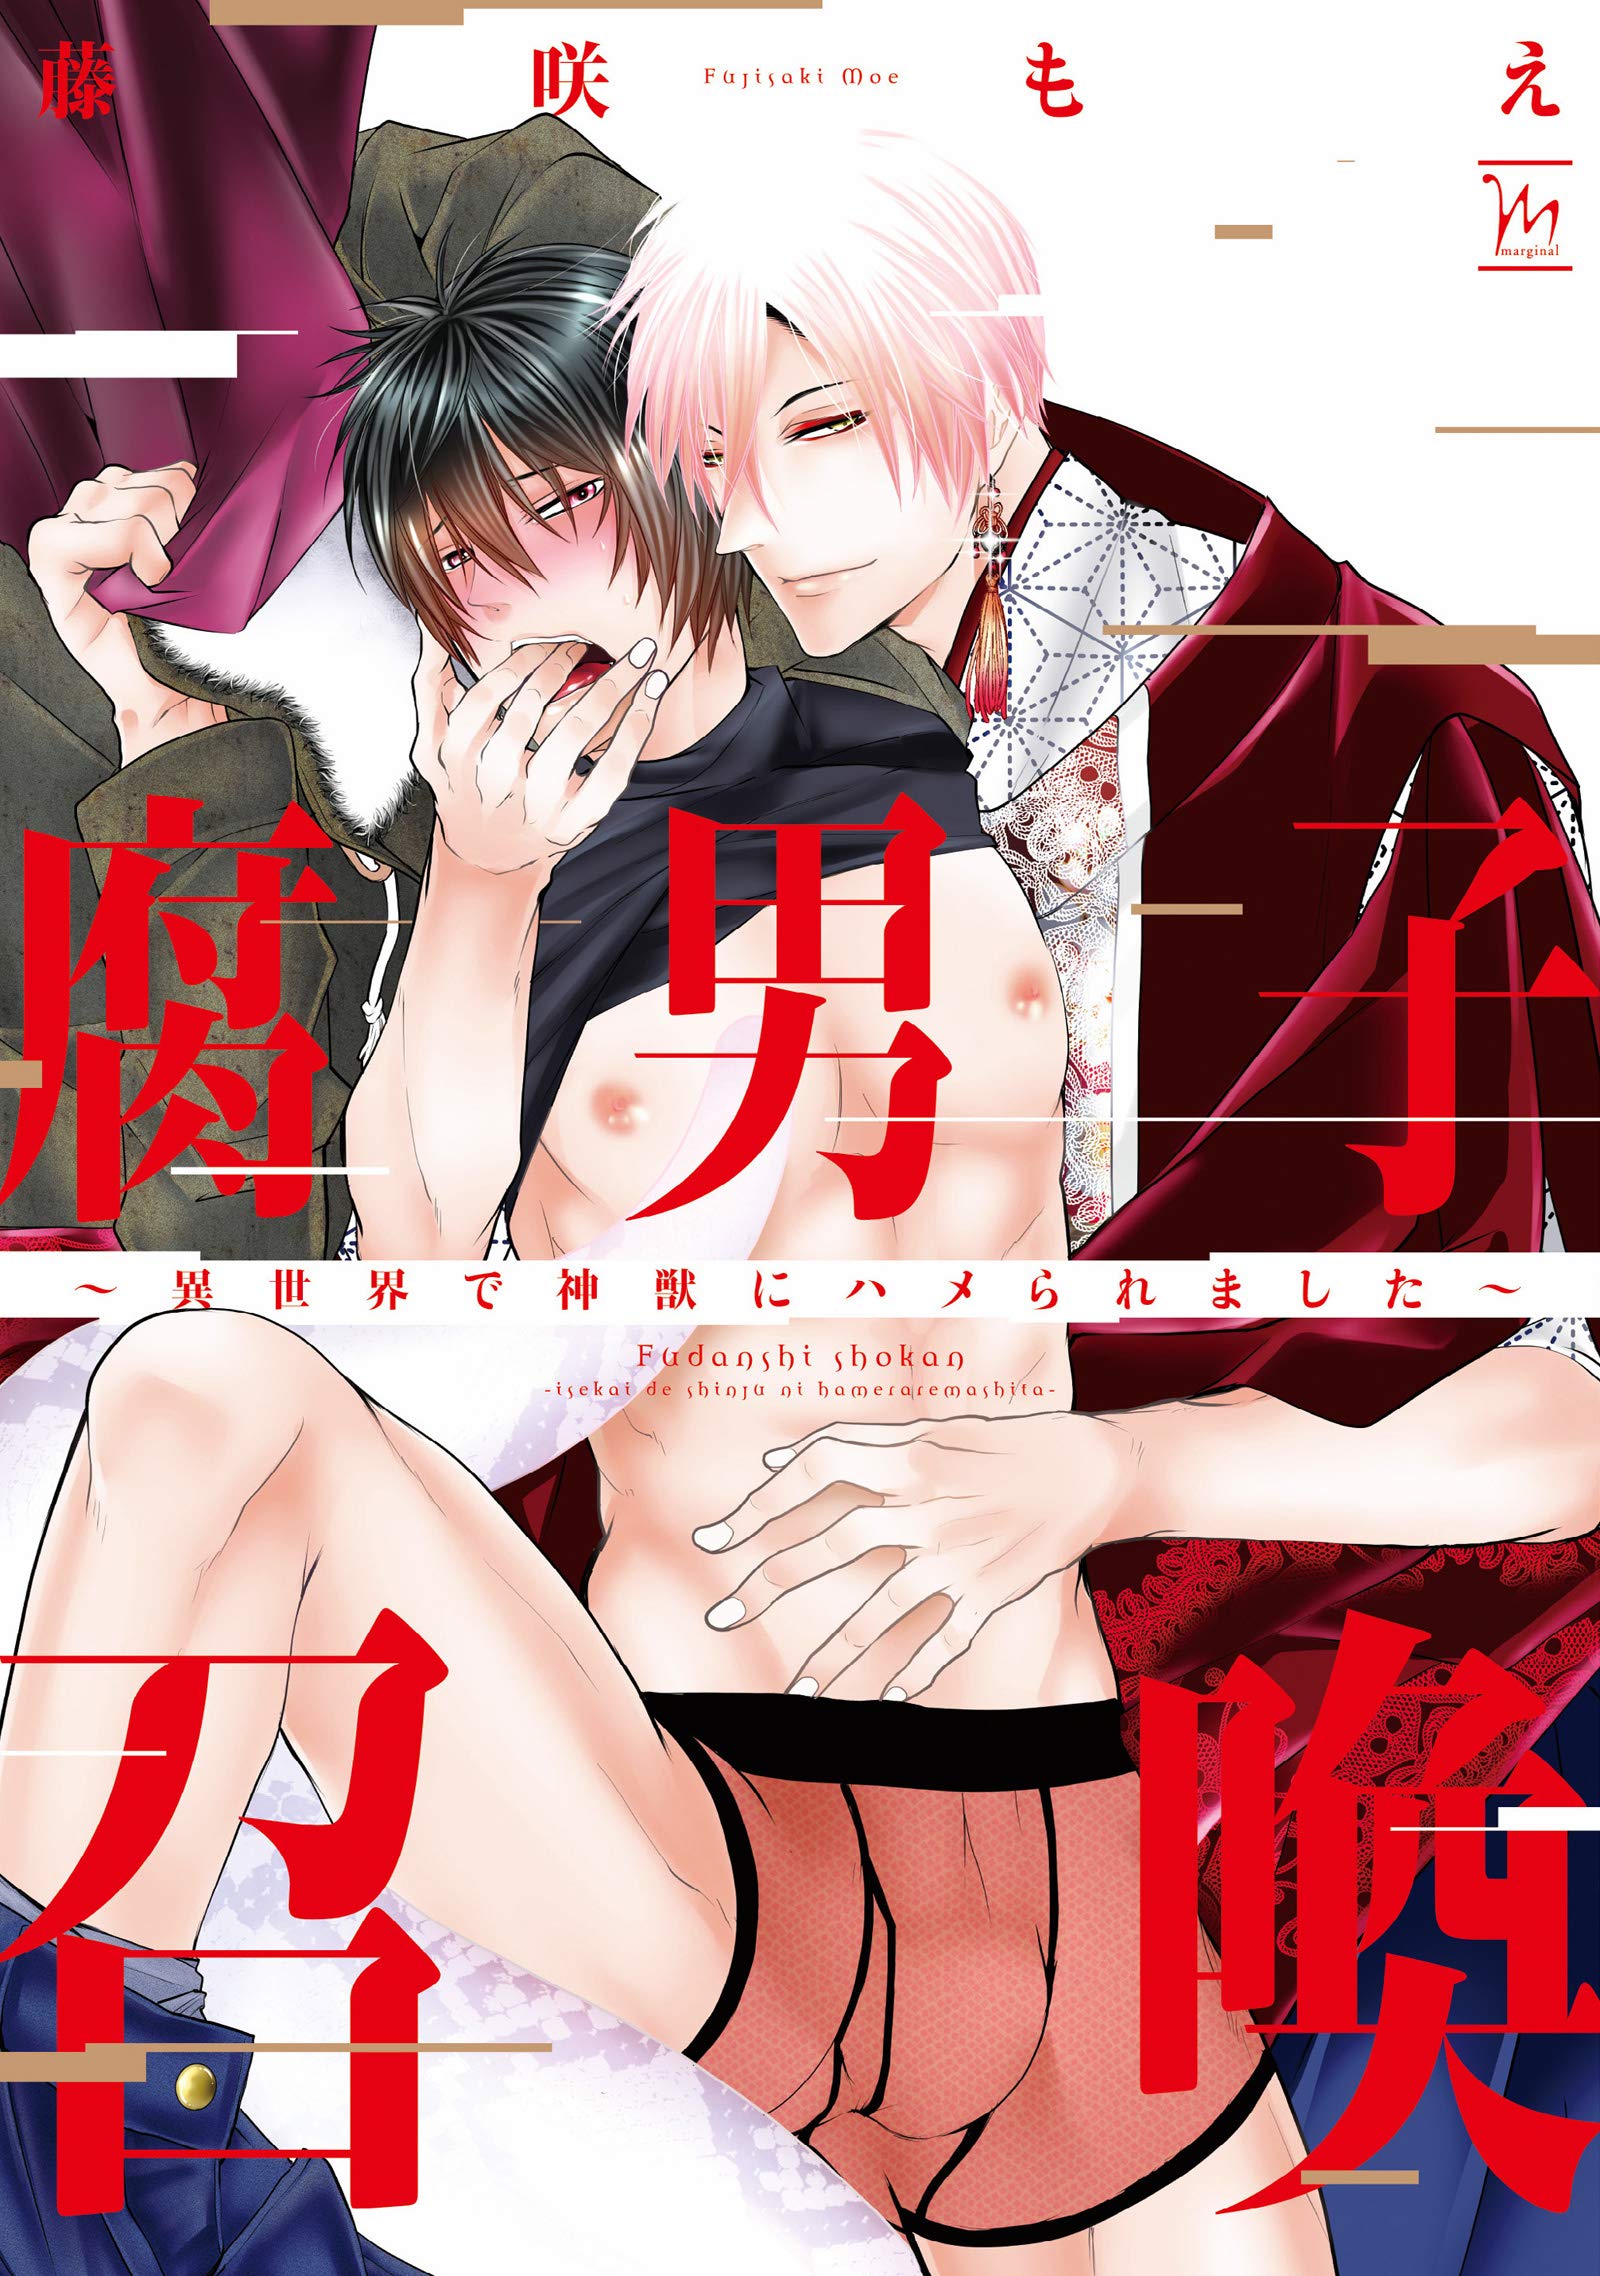 Boys Love (Yaoi) Comics - Fudanshi Shokan (腐男子召喚～異世界で神獣にハメられました～) / Fujisaki Moe